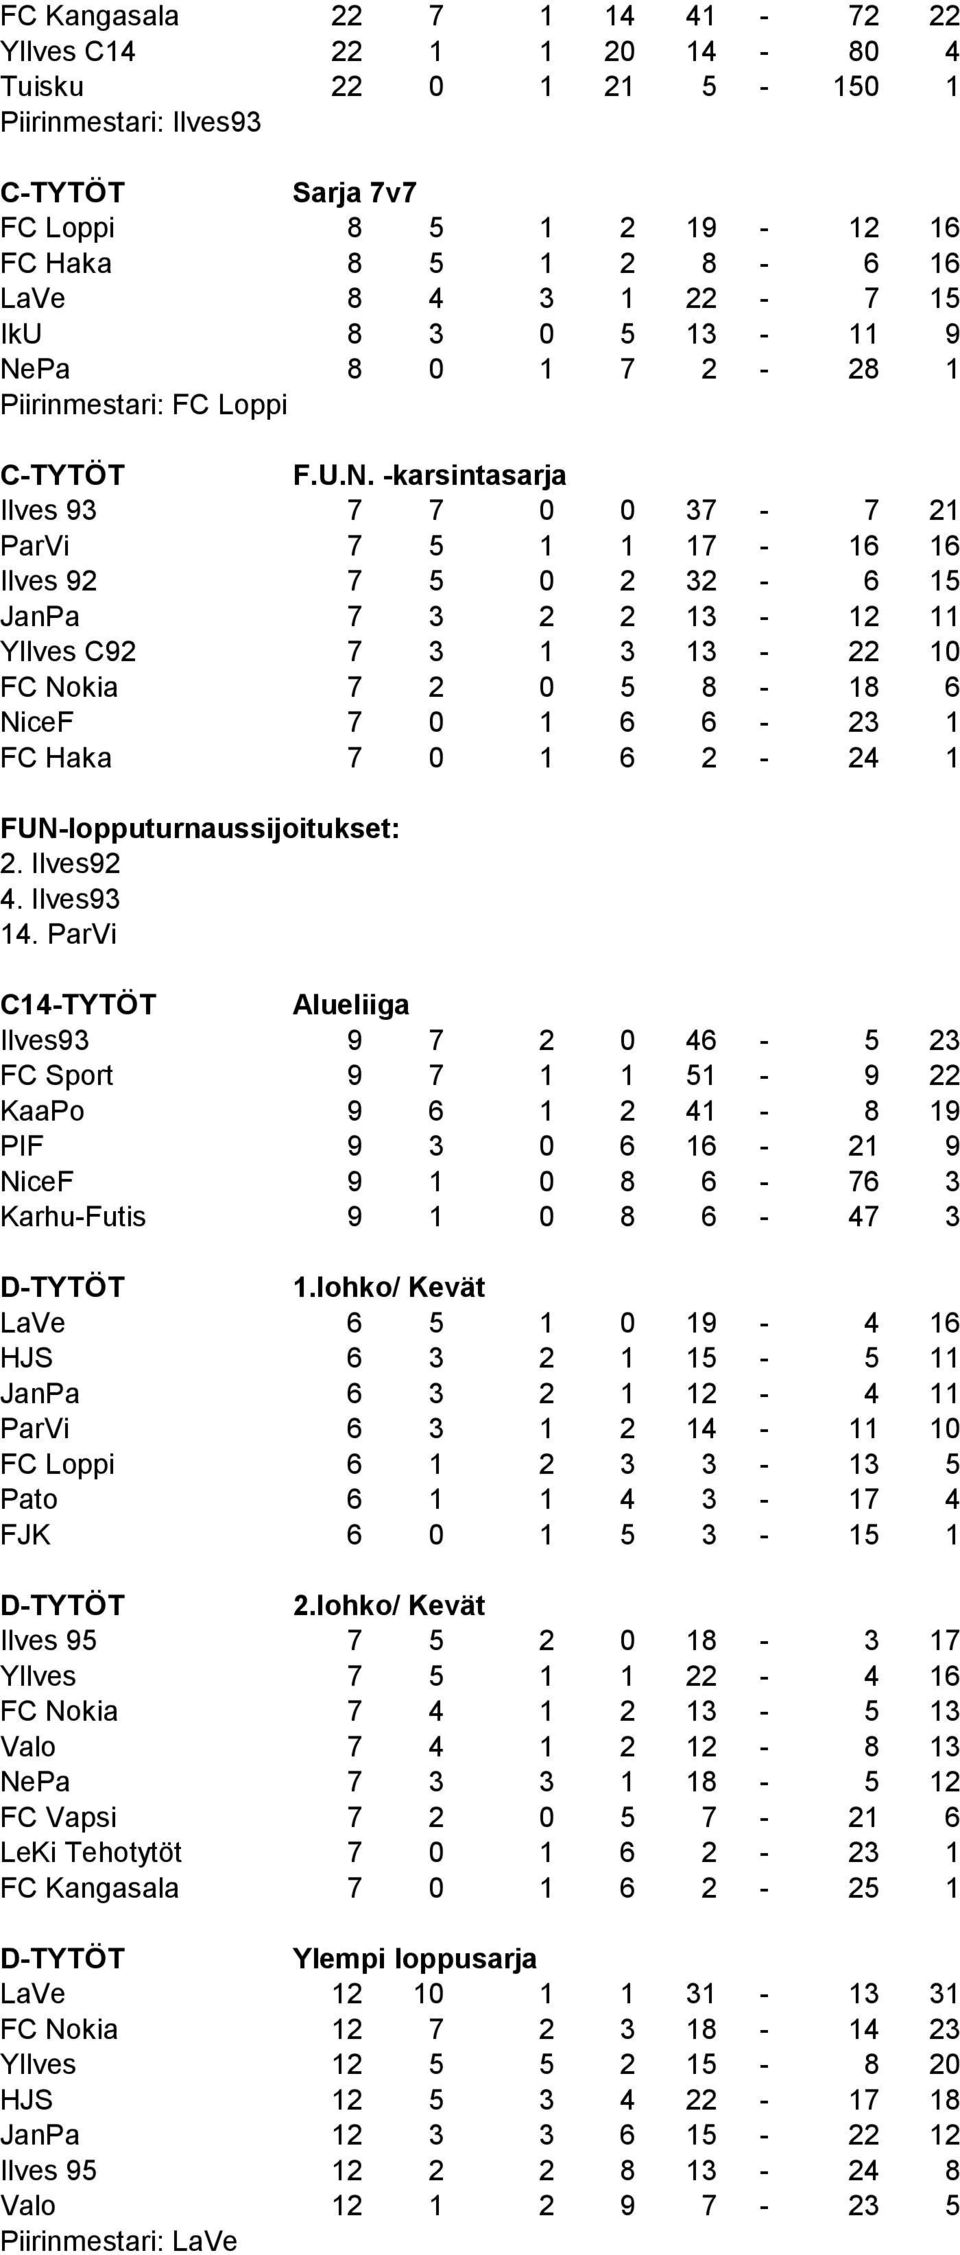 Pa 8 0 1 7 2-28 1 Piirinmestari: FC Loppi C-TYTÖT F.U.N.